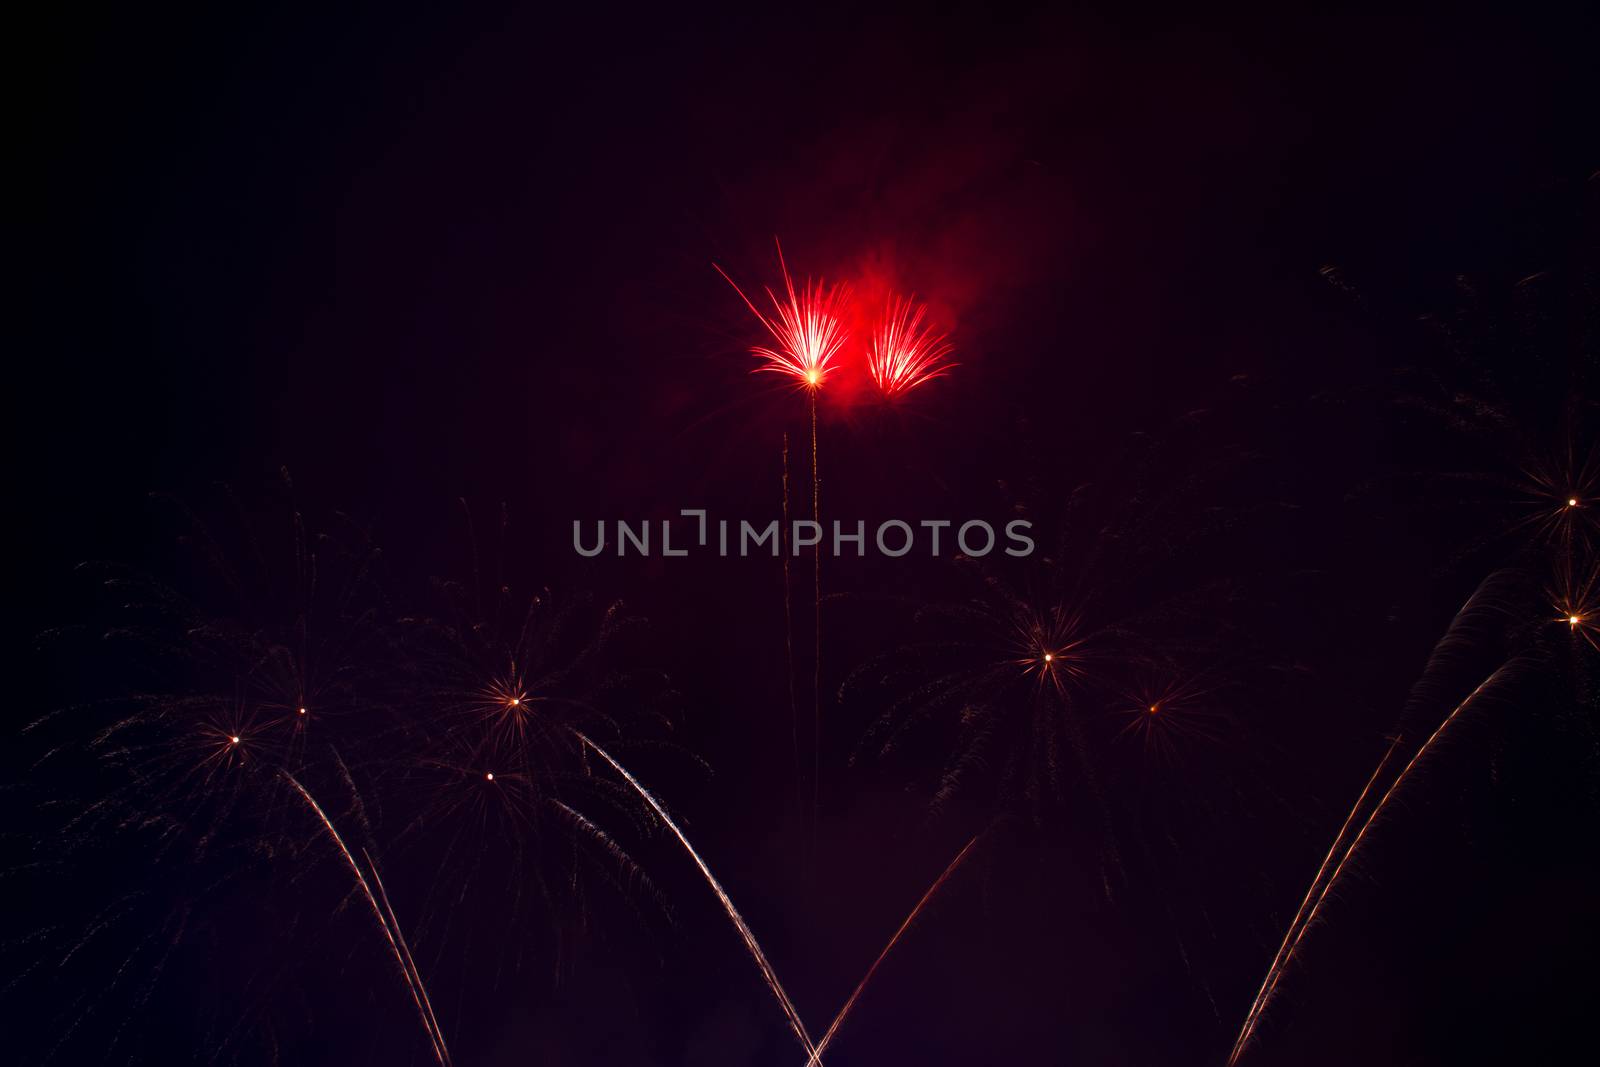 fireworks by jee1999